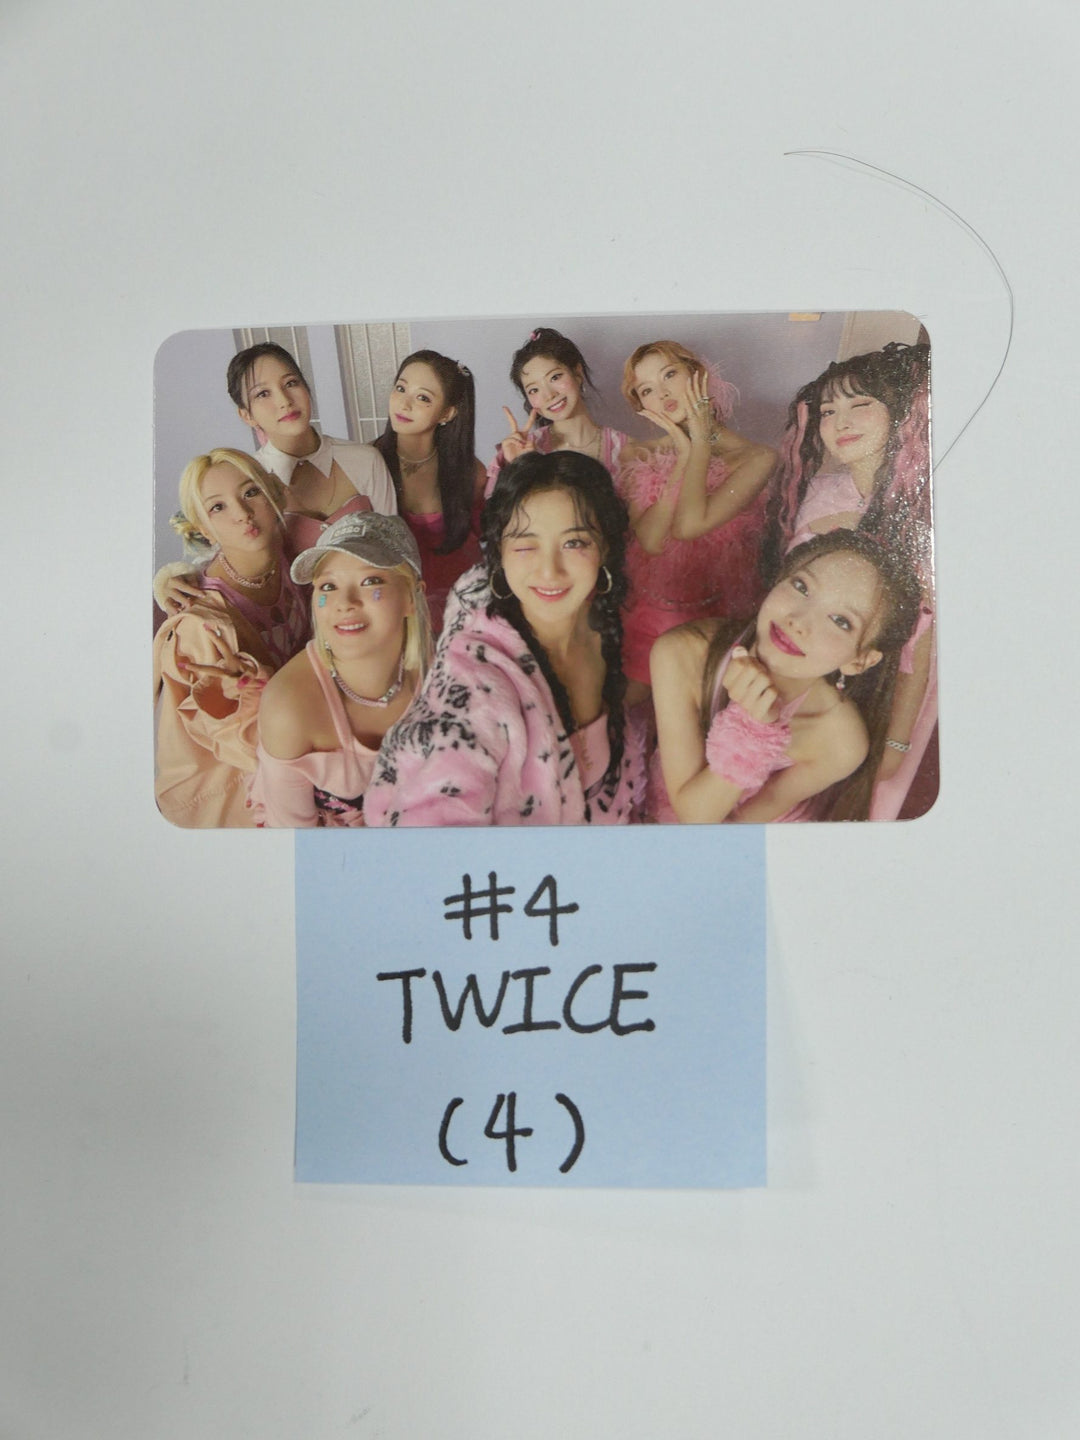 TWICE 'Formula of Love: O+T=<3' - Official Photocard [Dahyun, Jeong yeon, Jihyo, Twice]